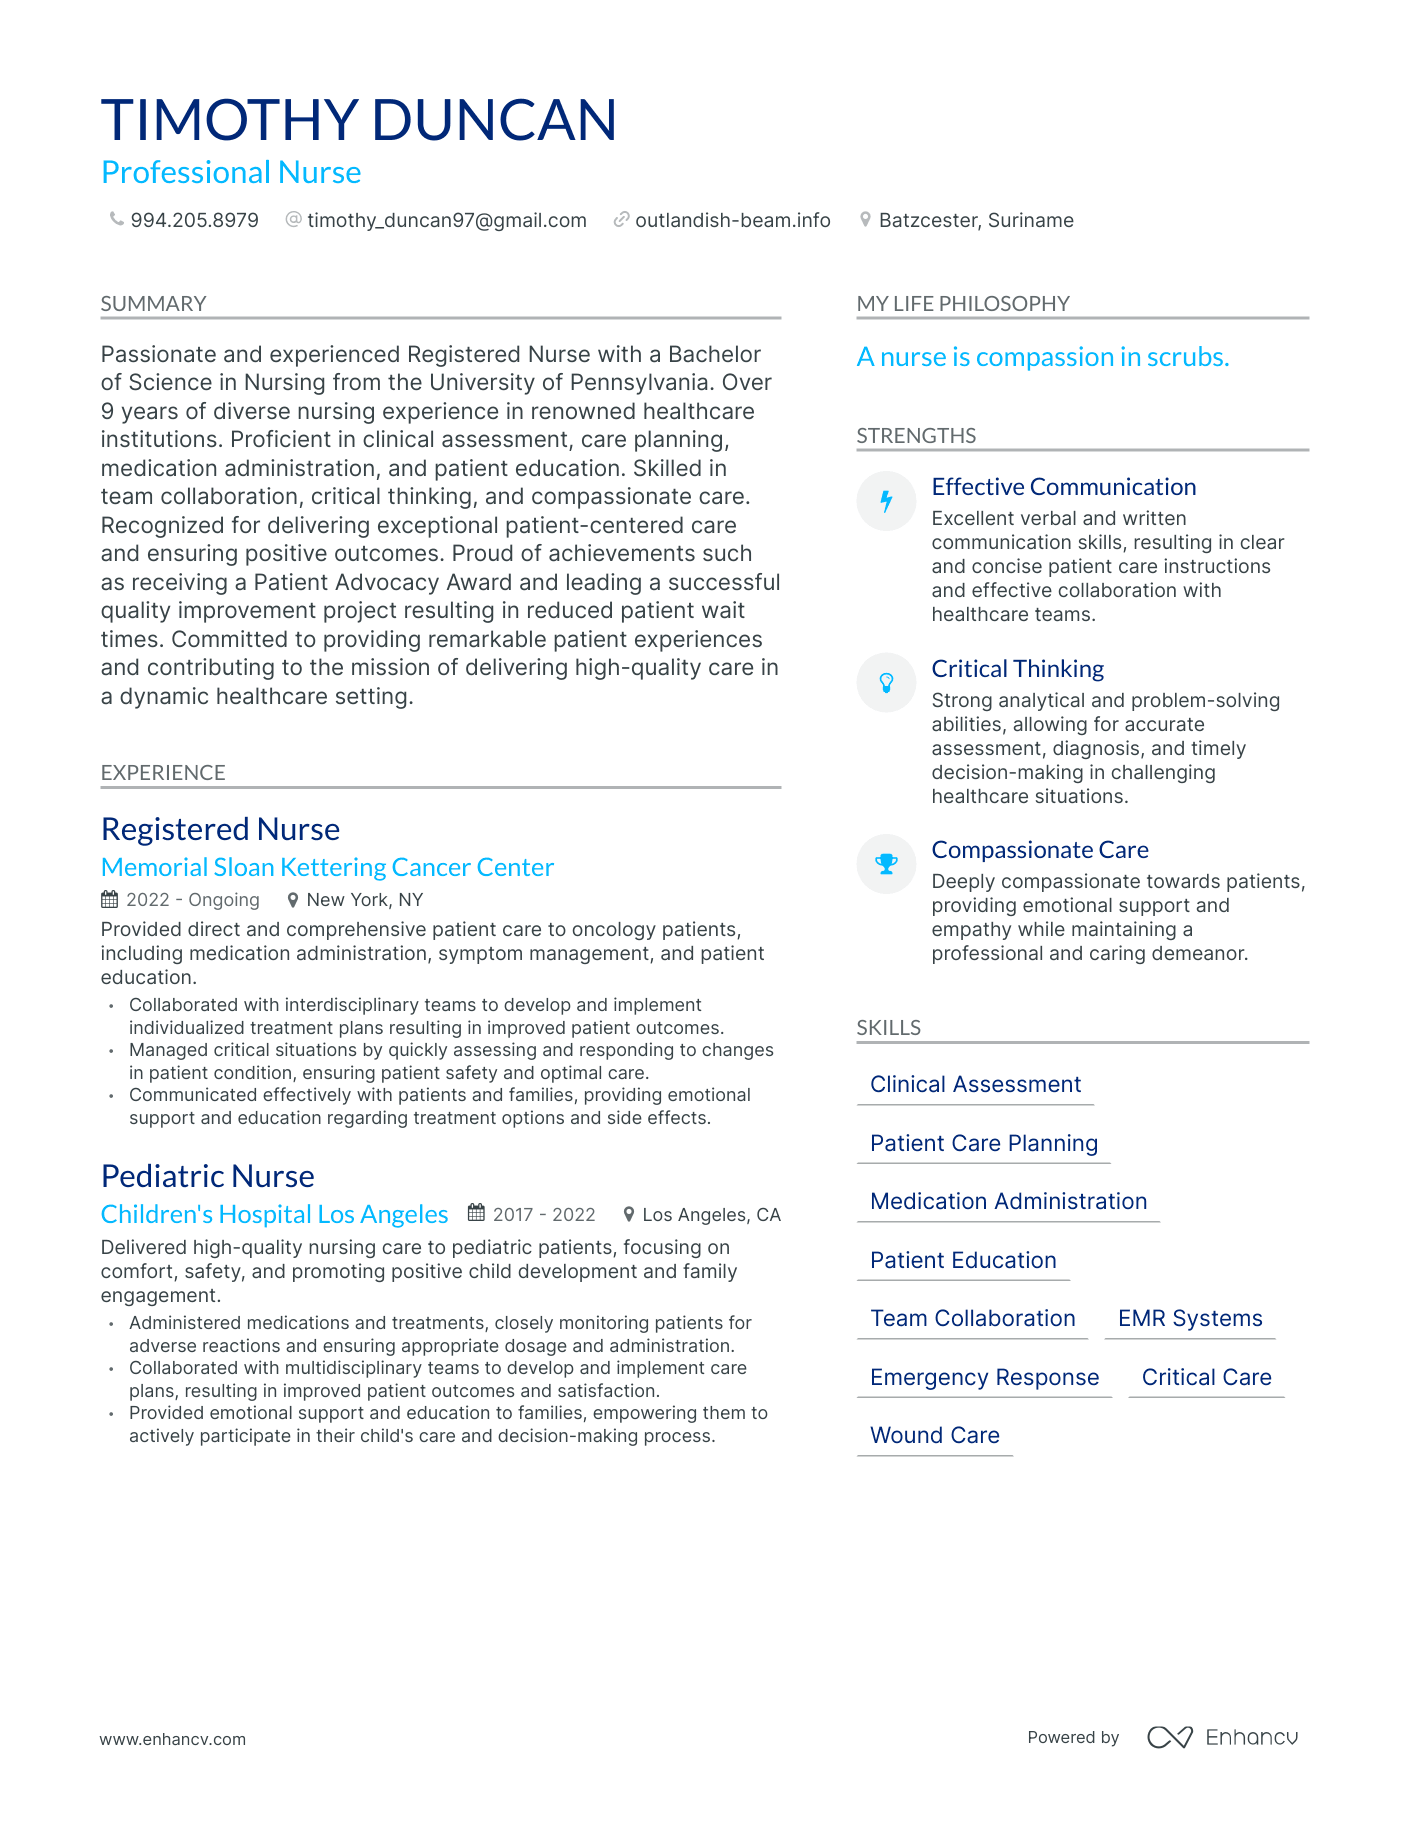 Professional Nurse resume example